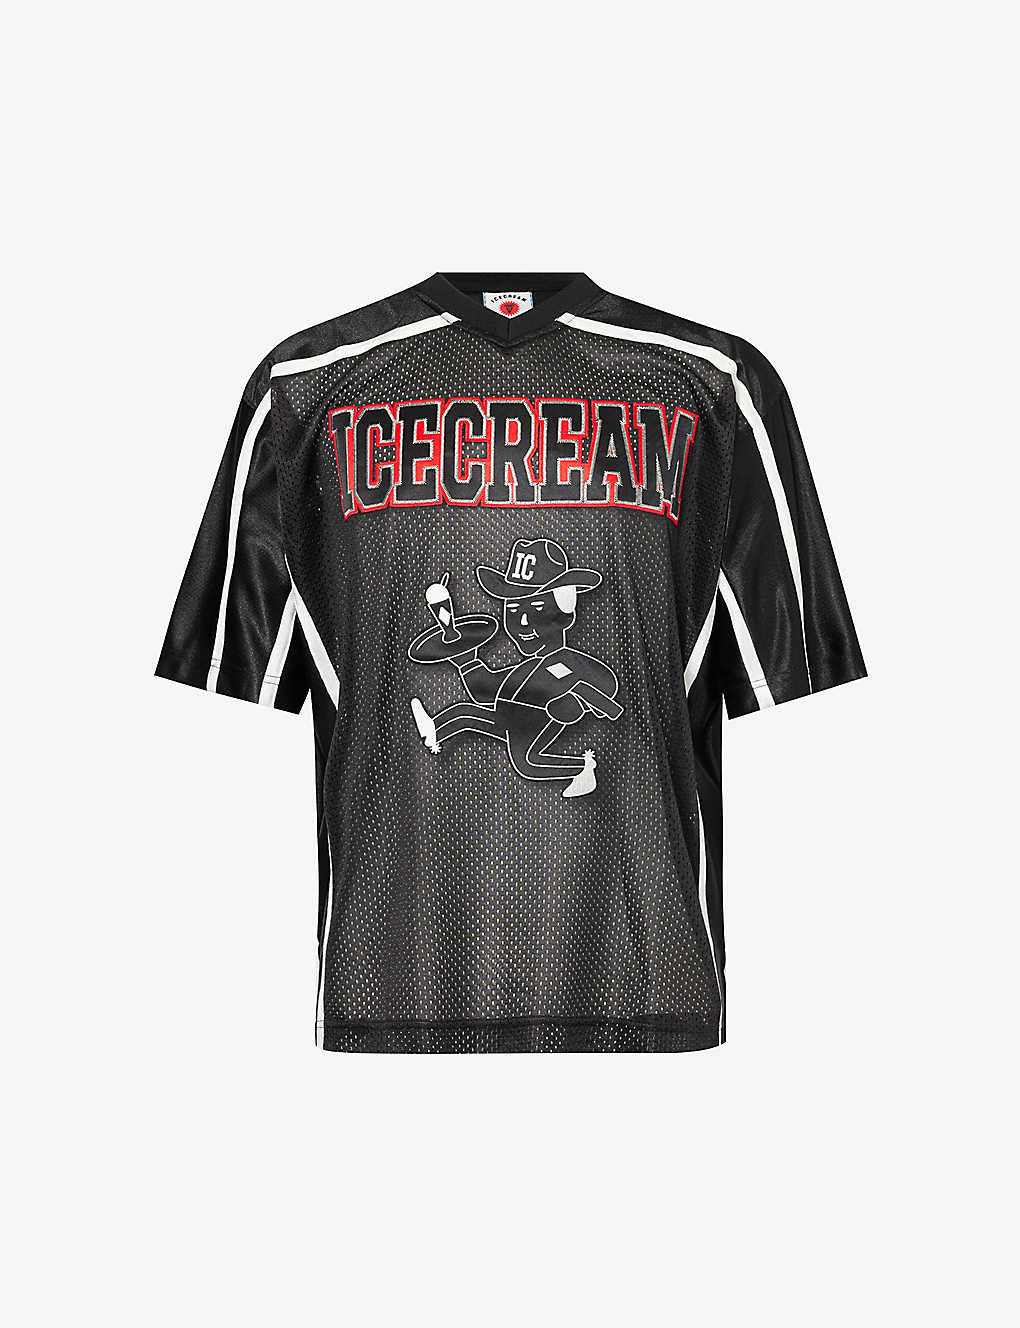 Icecream Black Football Jersey T-shirt